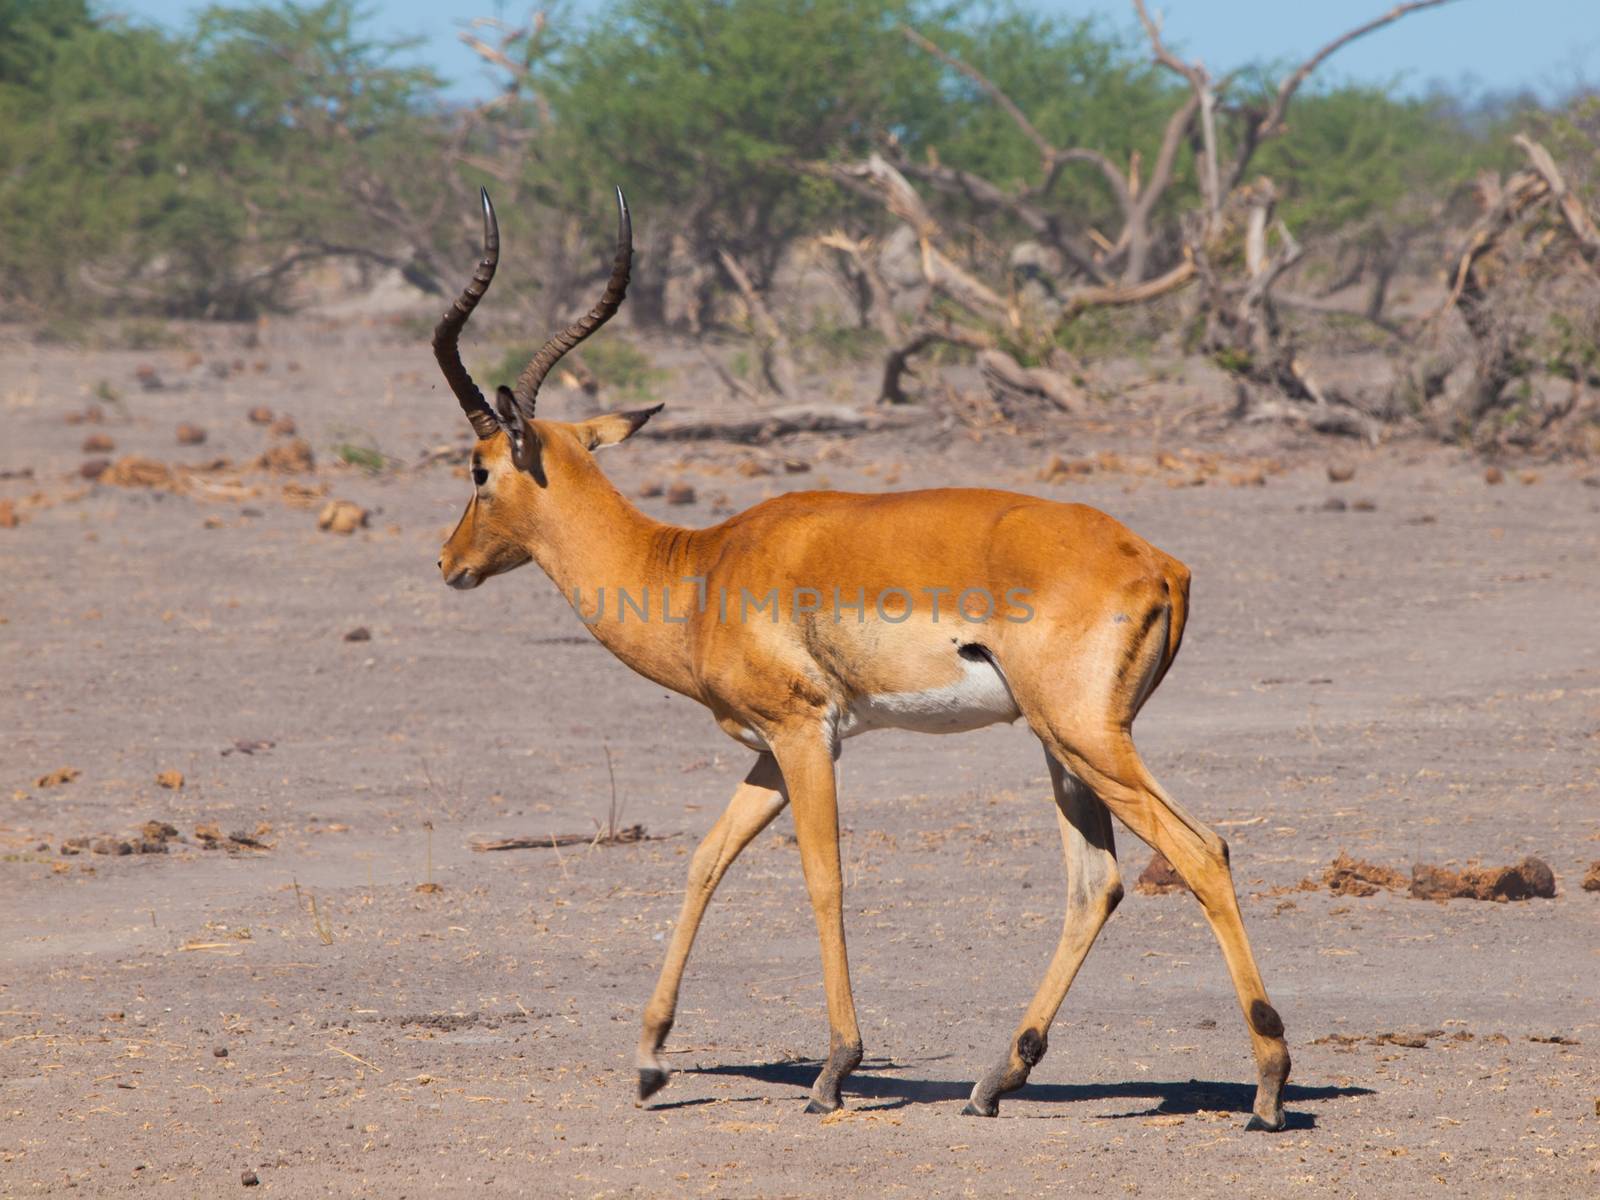 Young impala on safari game drive (Chobe National Park, Botswana)